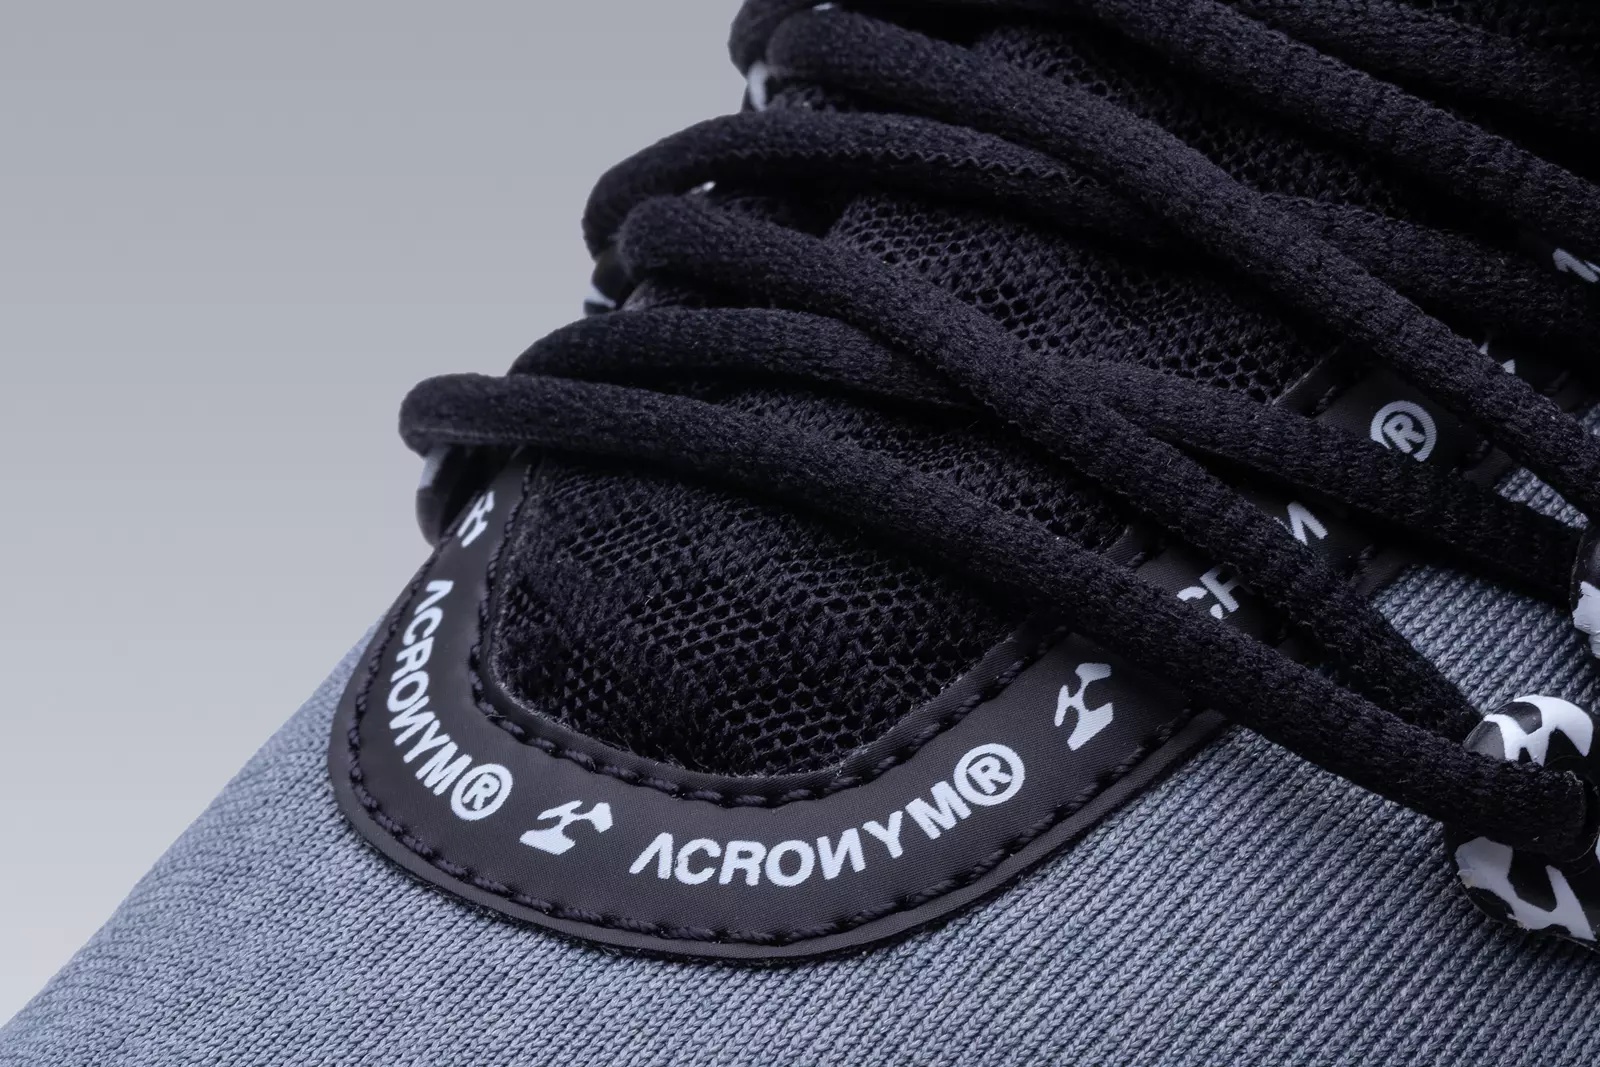 APM2-001 Nike® Air Presto Mid / Acronym® Cool Grey / Black / Black - 11